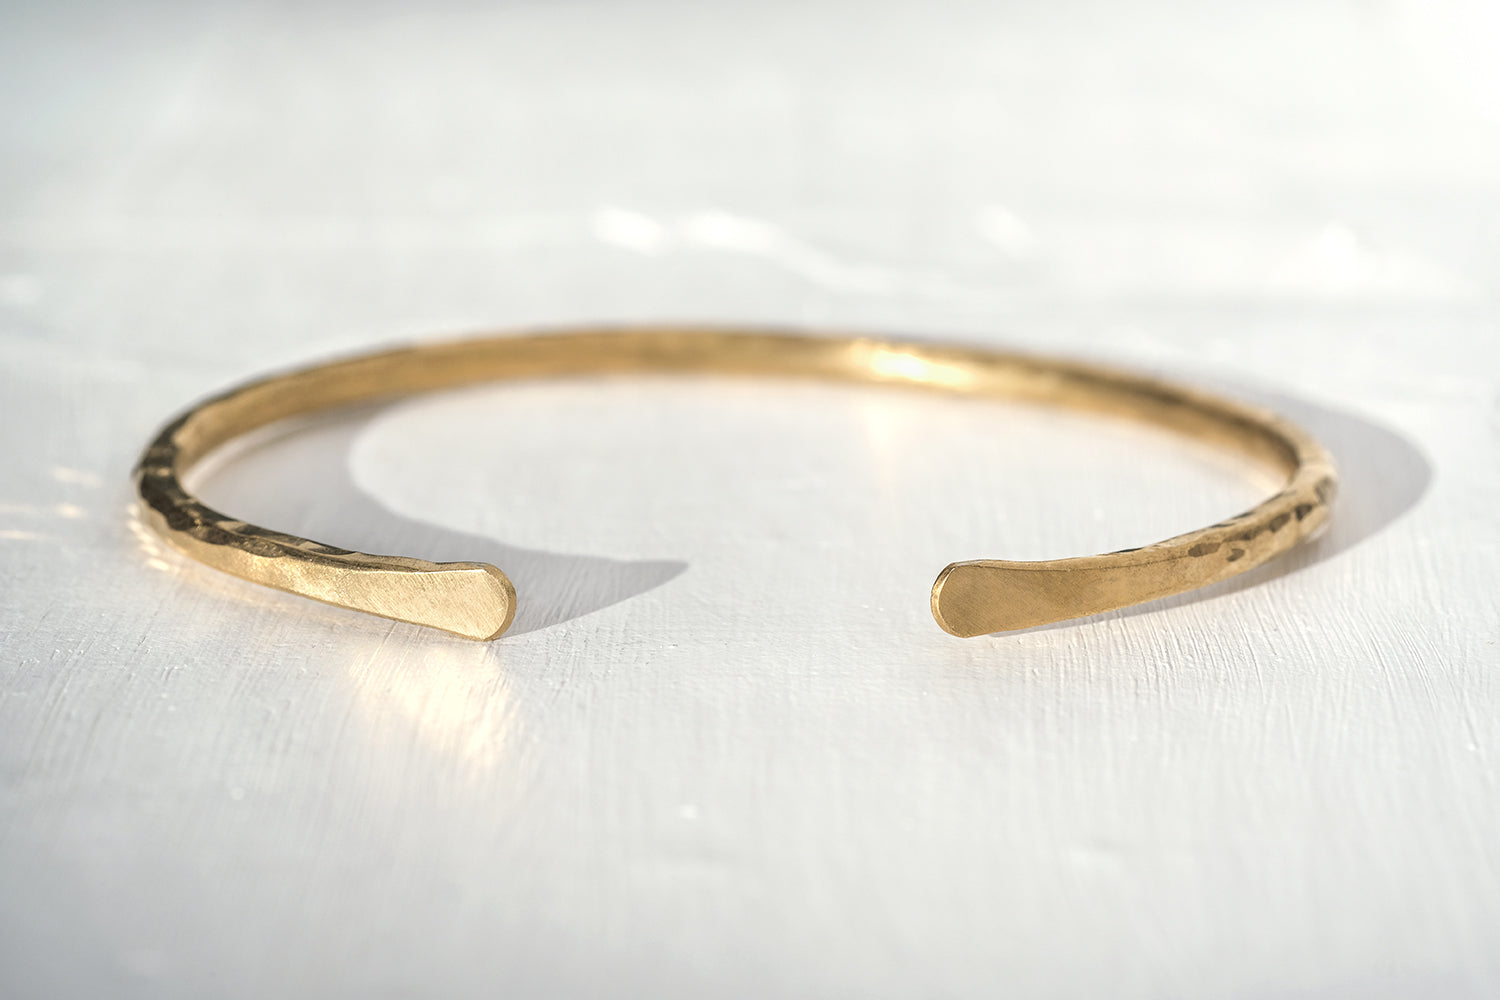 Gold Bracelet For Men - Thin and Hammered